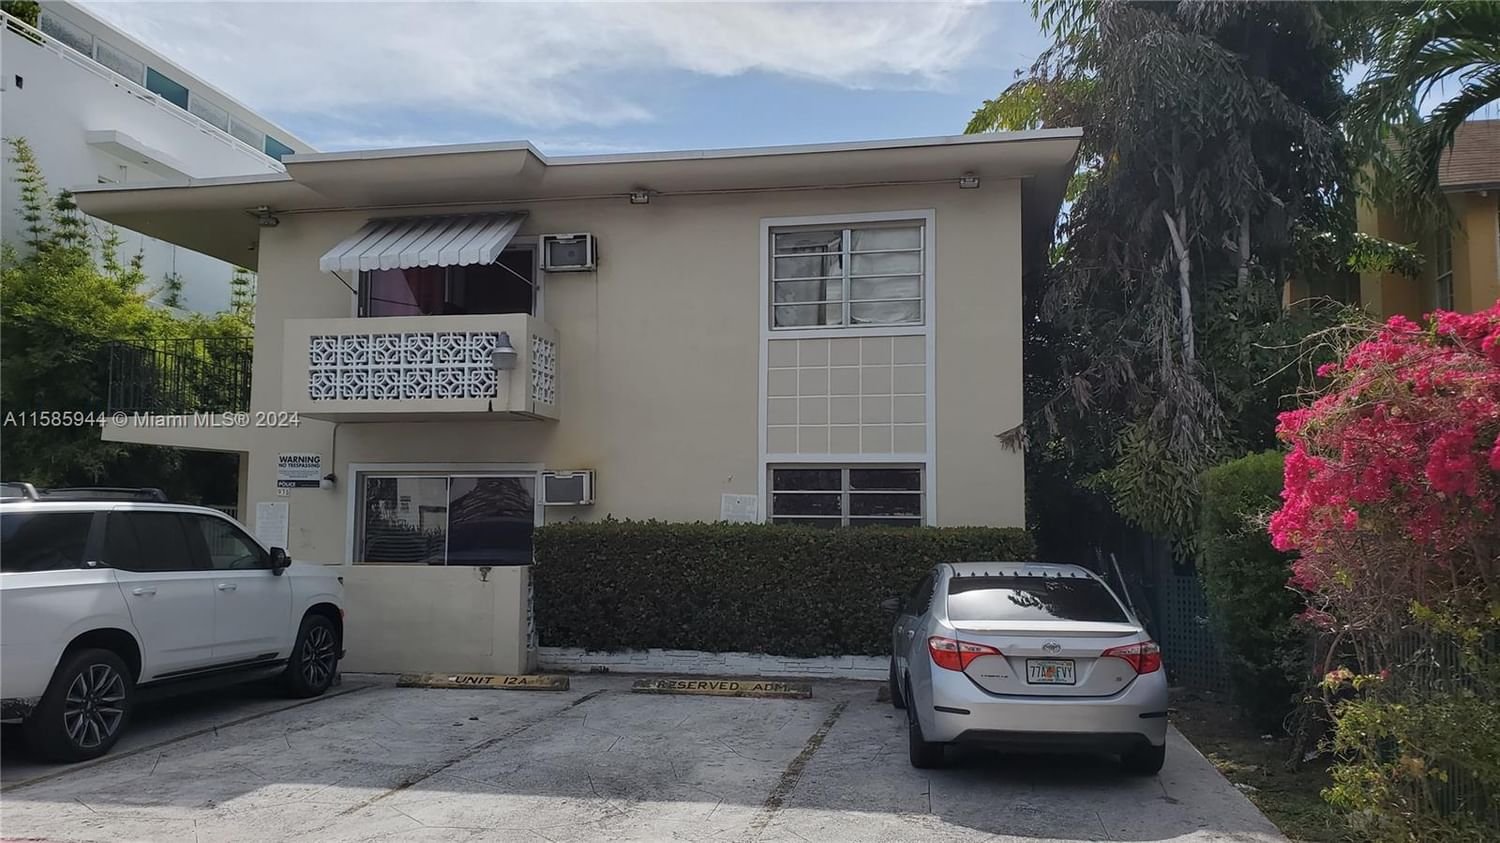 Real estate property located at 935 Jefferson Ave, Miami-Dade County, OCEAN BEACH ADDN NO 3, Miami Beach, FL